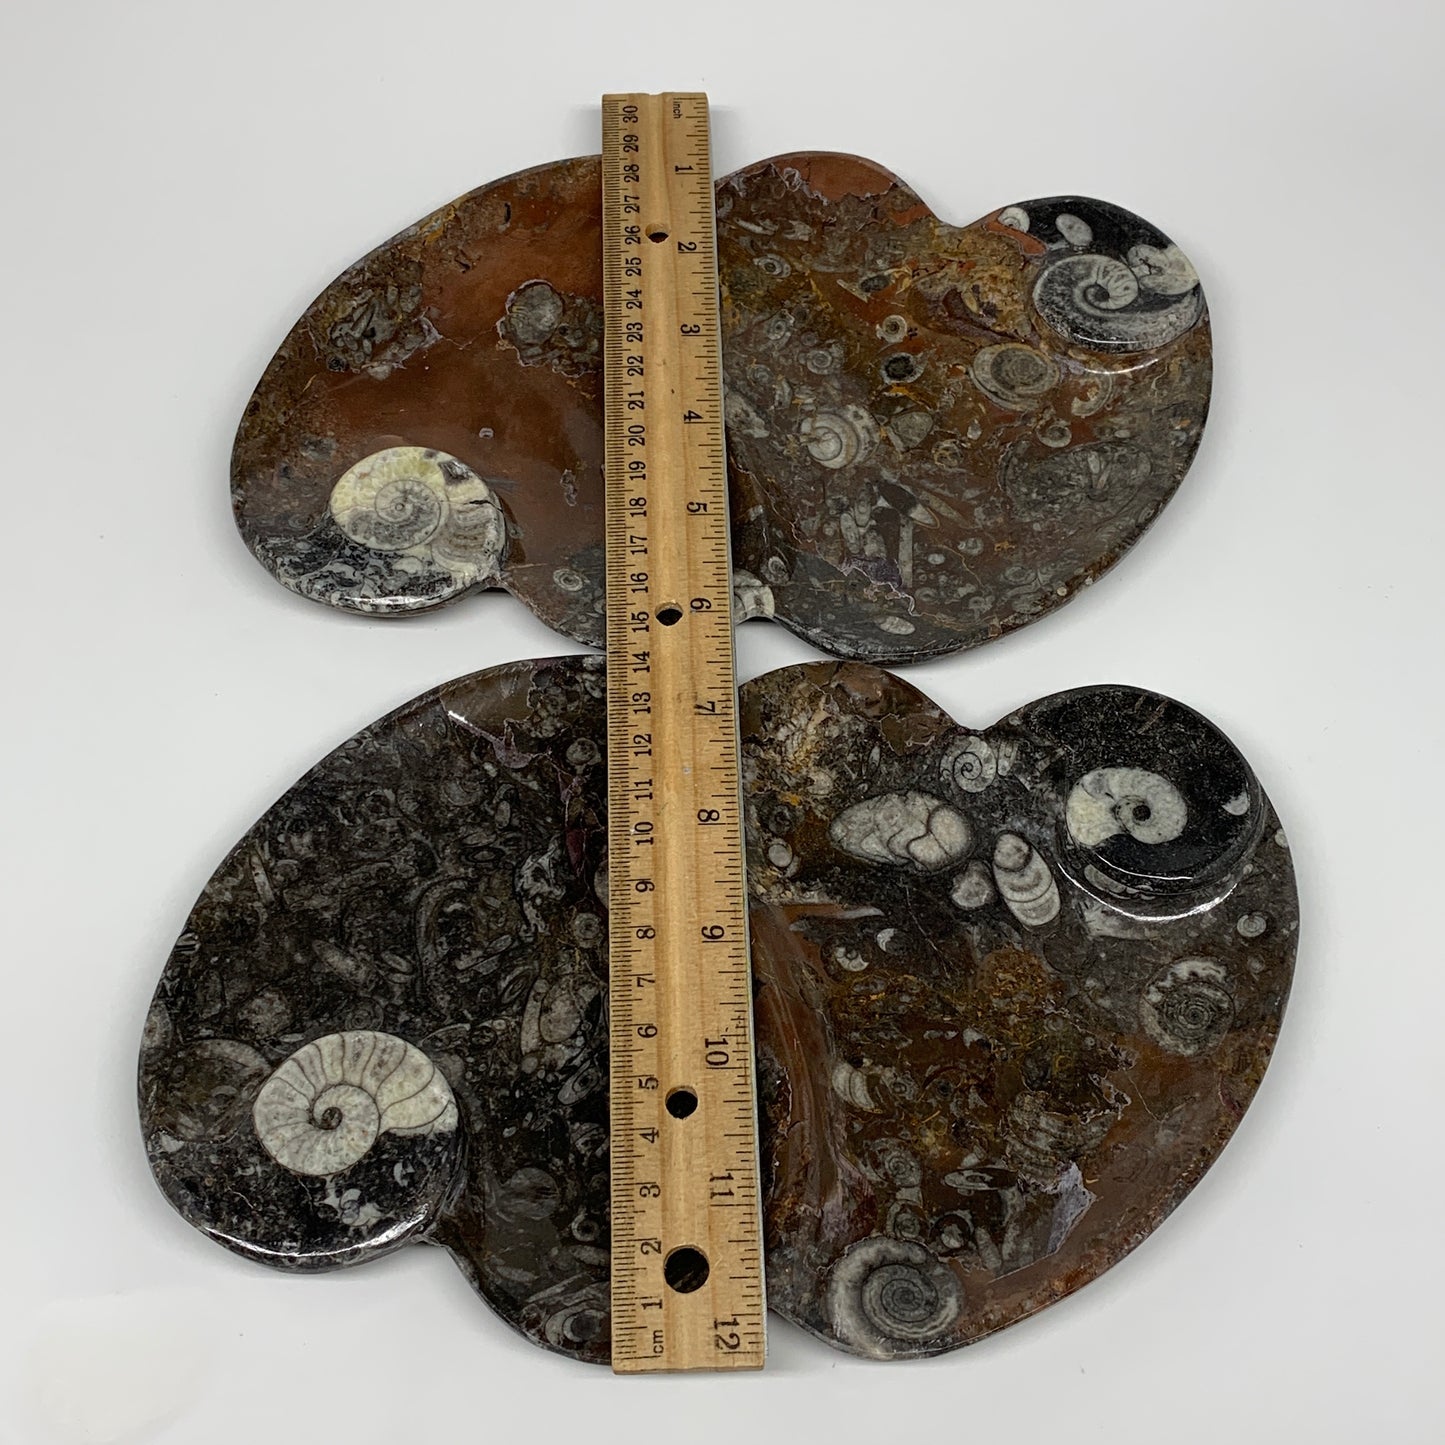 2pcs Set,8.5"x5.5" Double Heart Fossils Orthoceras Ammonite Bowls @Morocco,B8511